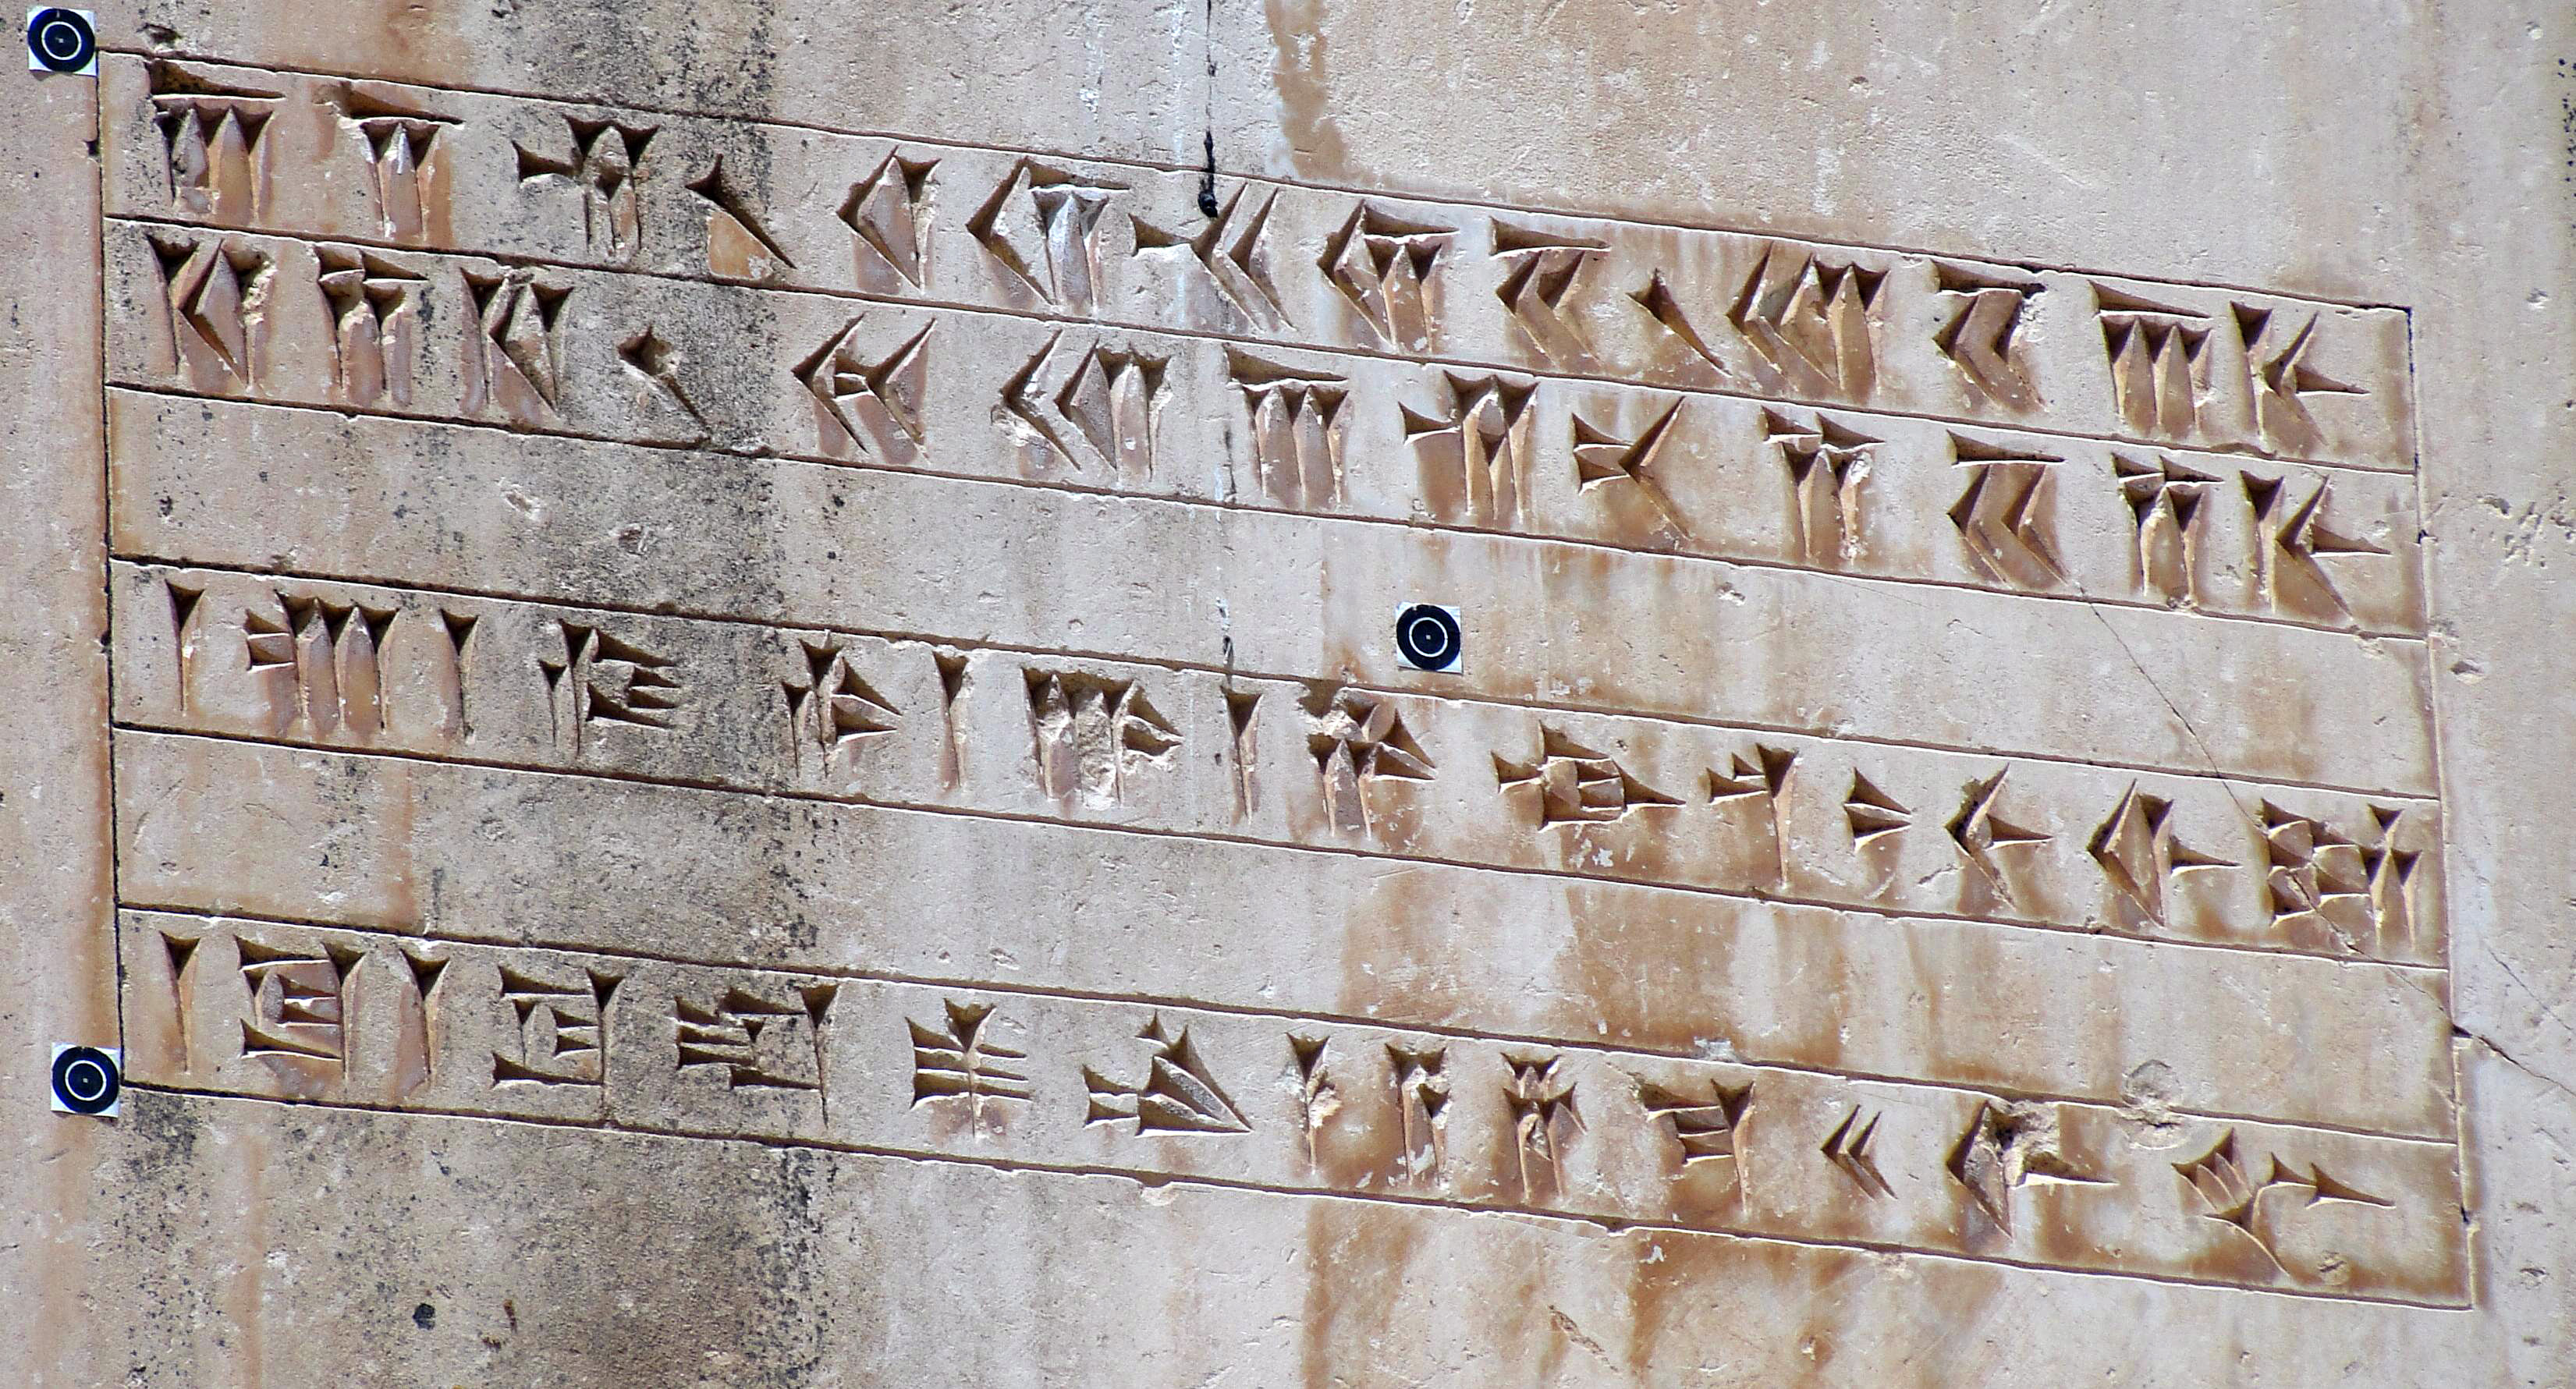 https://upload.wikimedia.org/wikipedia/commons/2/22/I_am_Cyrus%2C_Achaemenid_King_-_Pasargadae.JPG